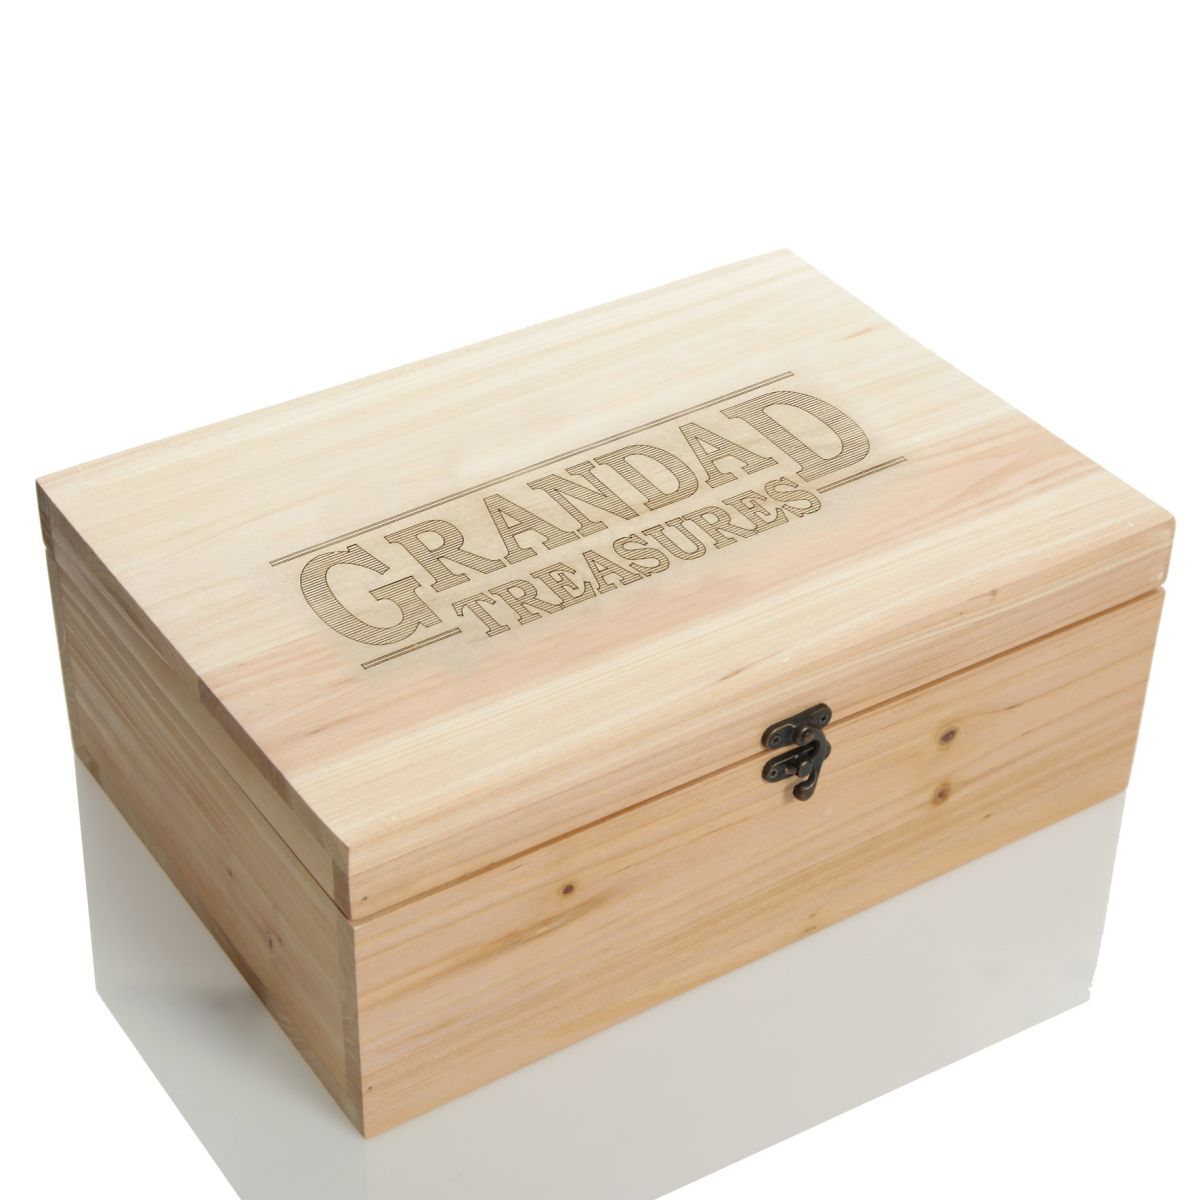 Men's Wooden Gift Box for weddings South Africa - Polkadot Box